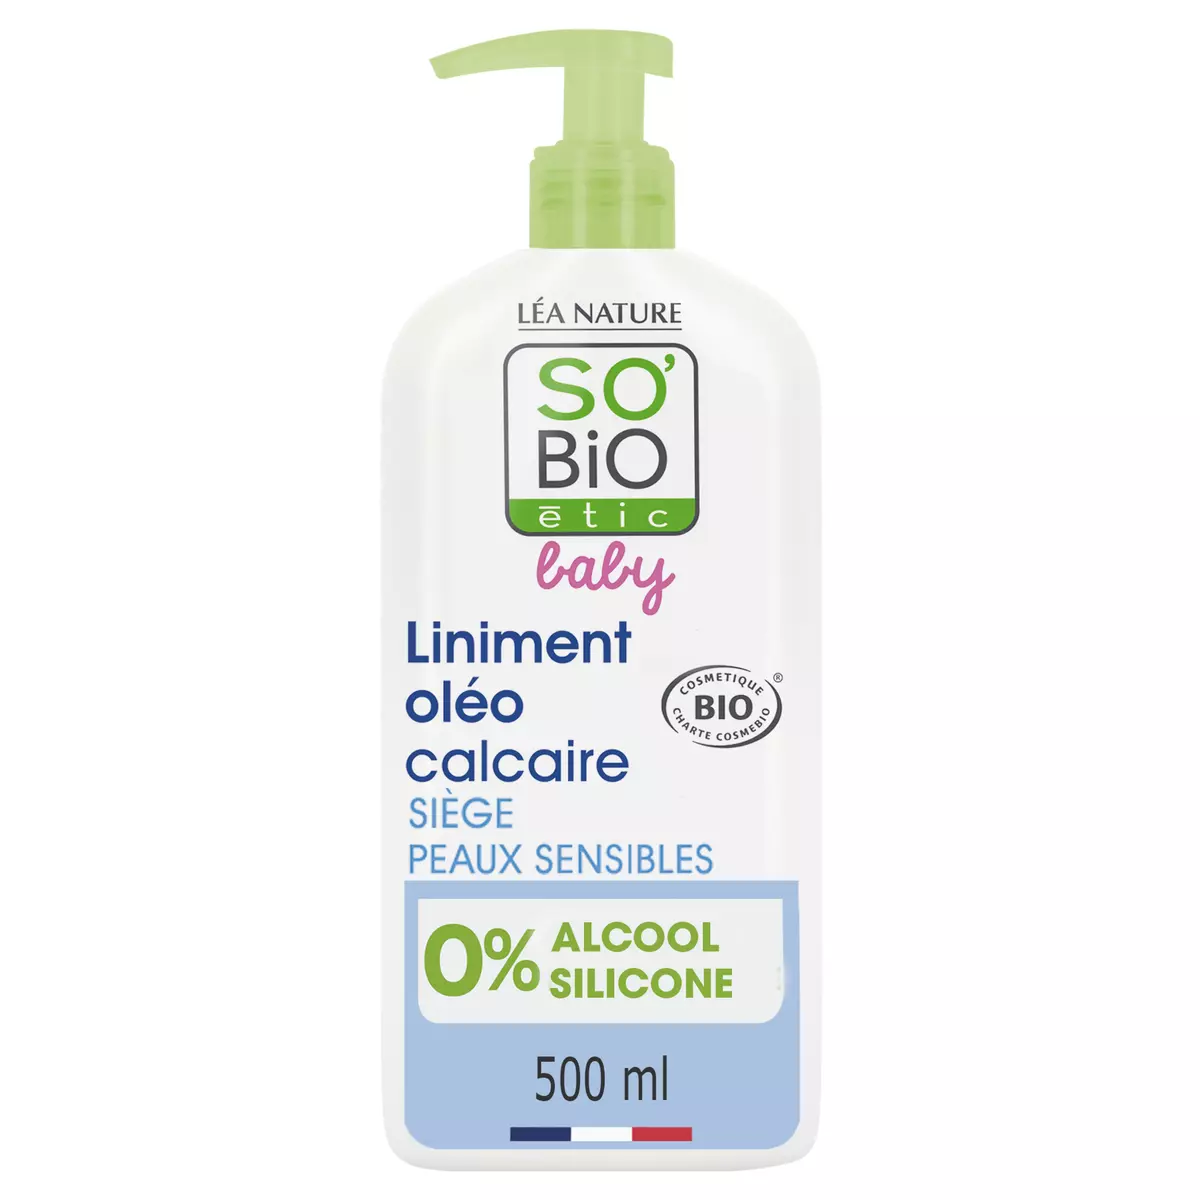 SO BIO ETIC Baby liniment oléo calcaire huile d'olive aloé vera bio 500ml